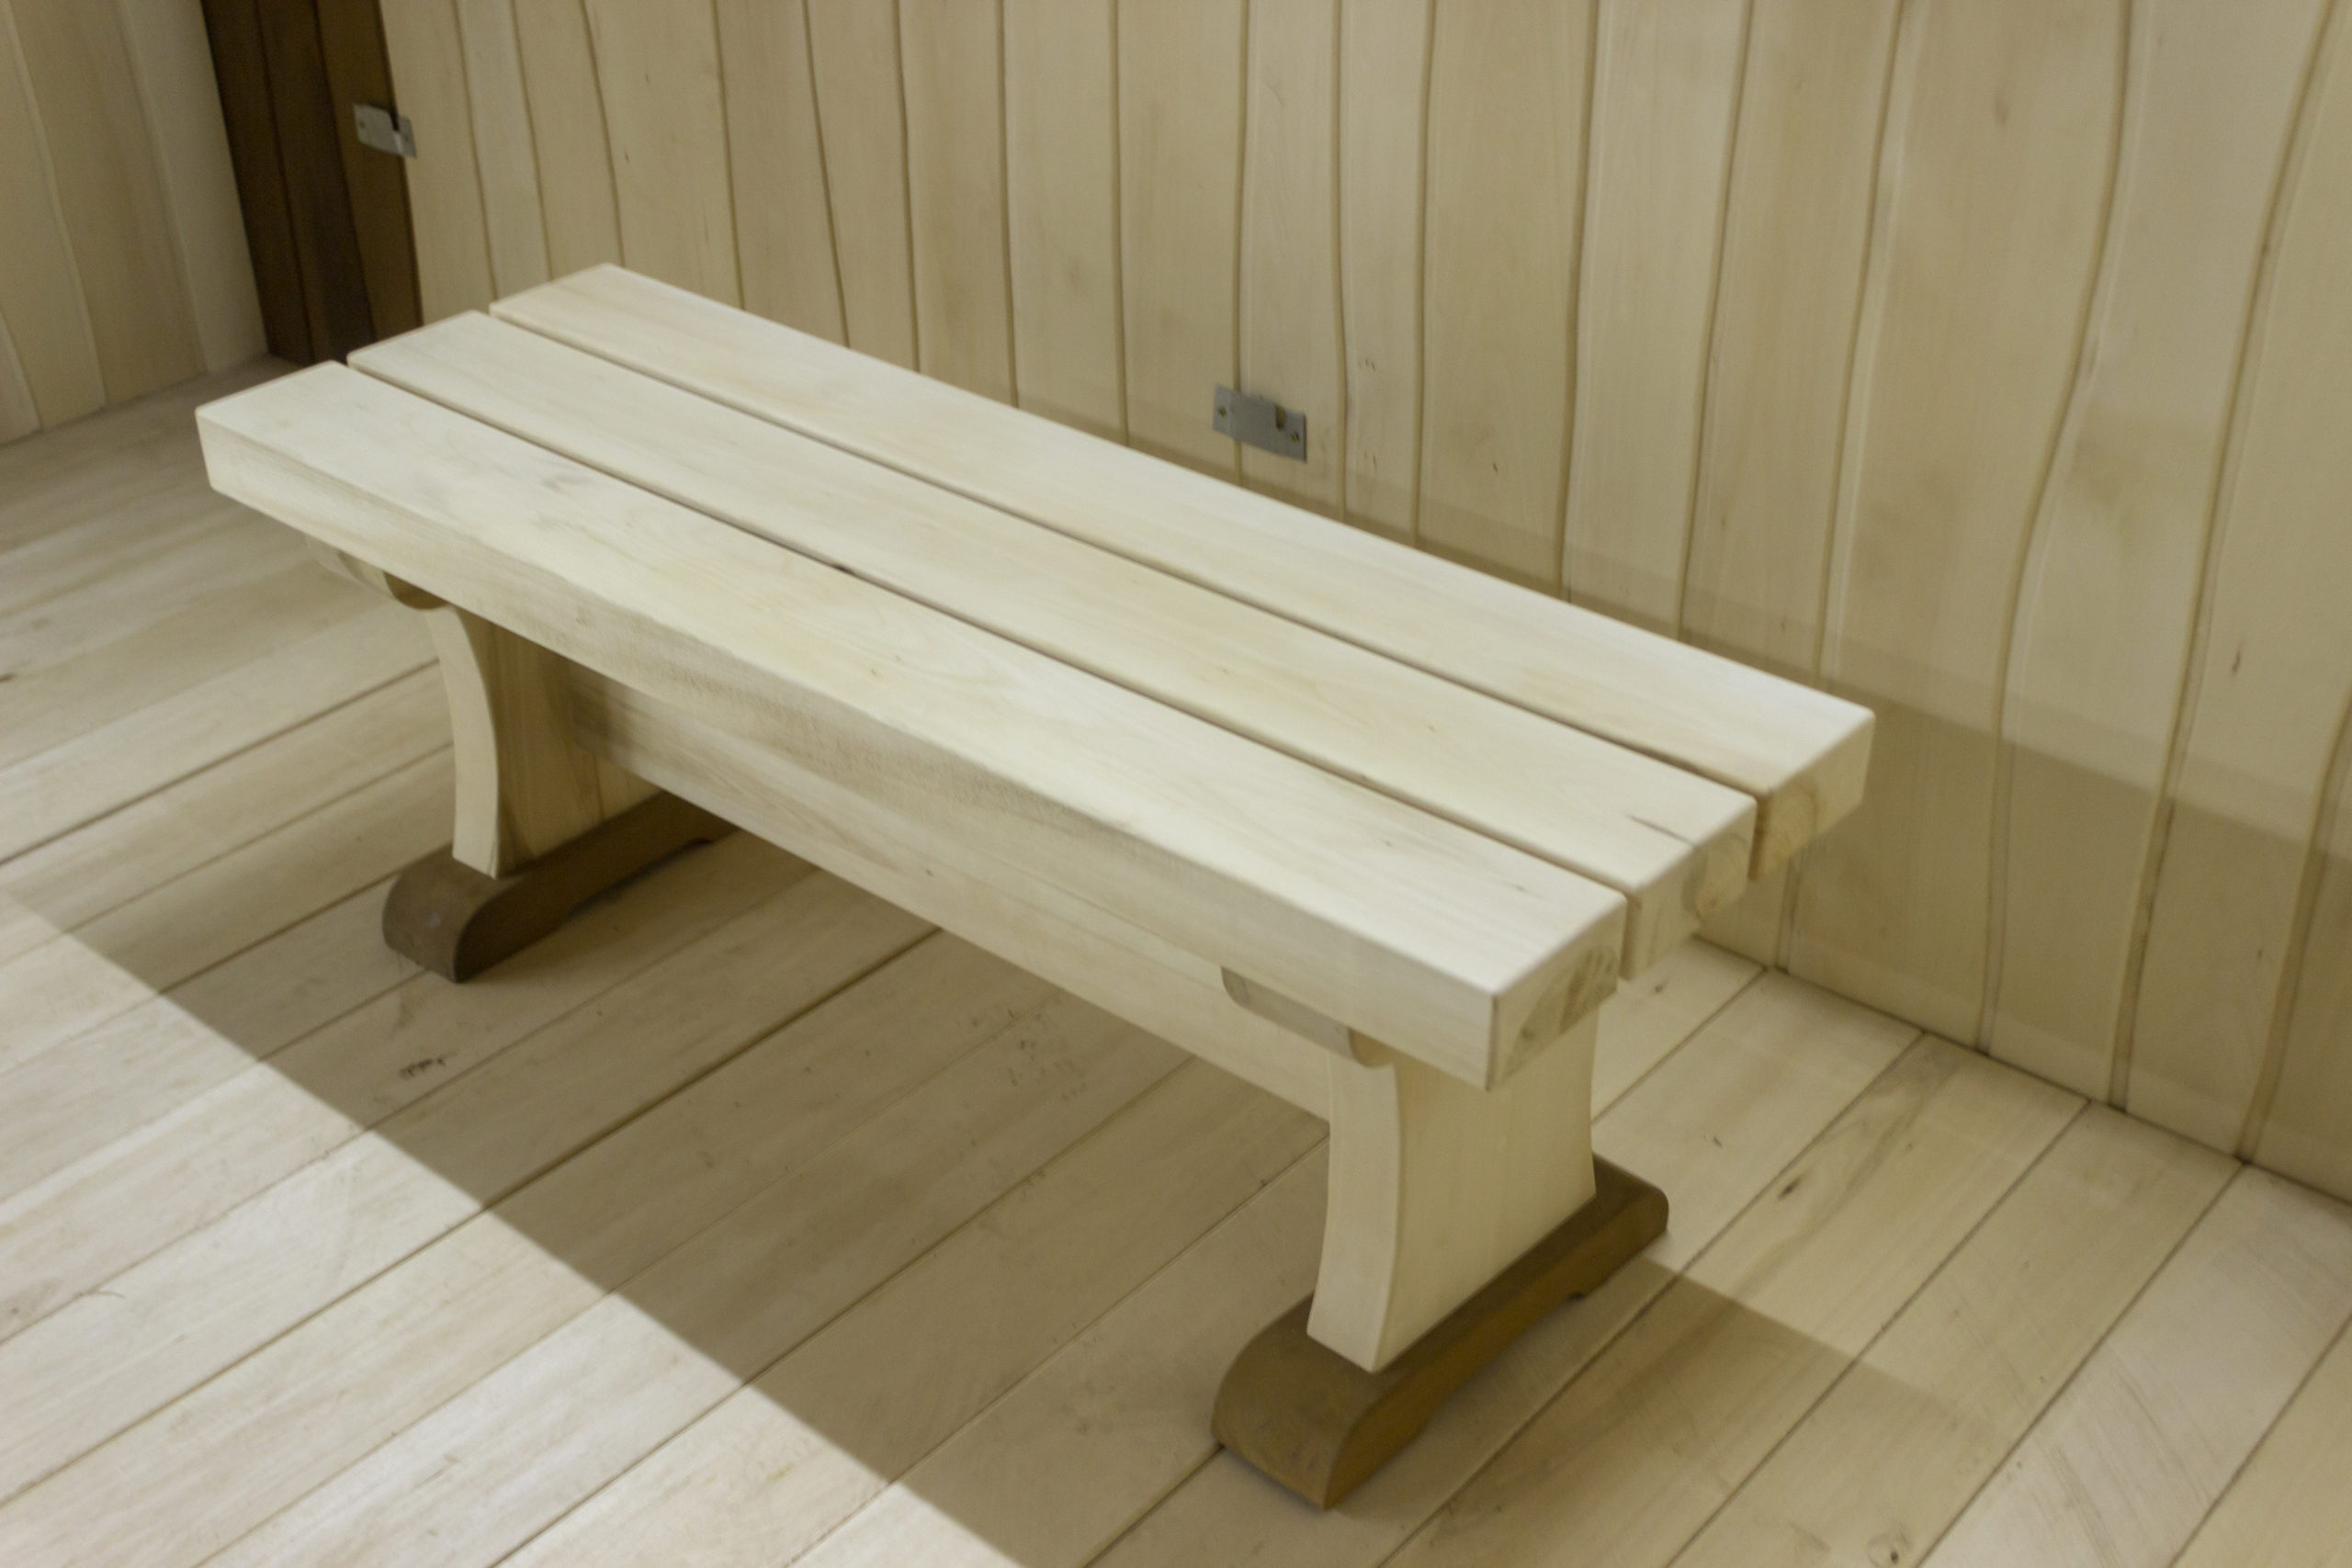 Buy a sauna bench in Israel on the bulletin board